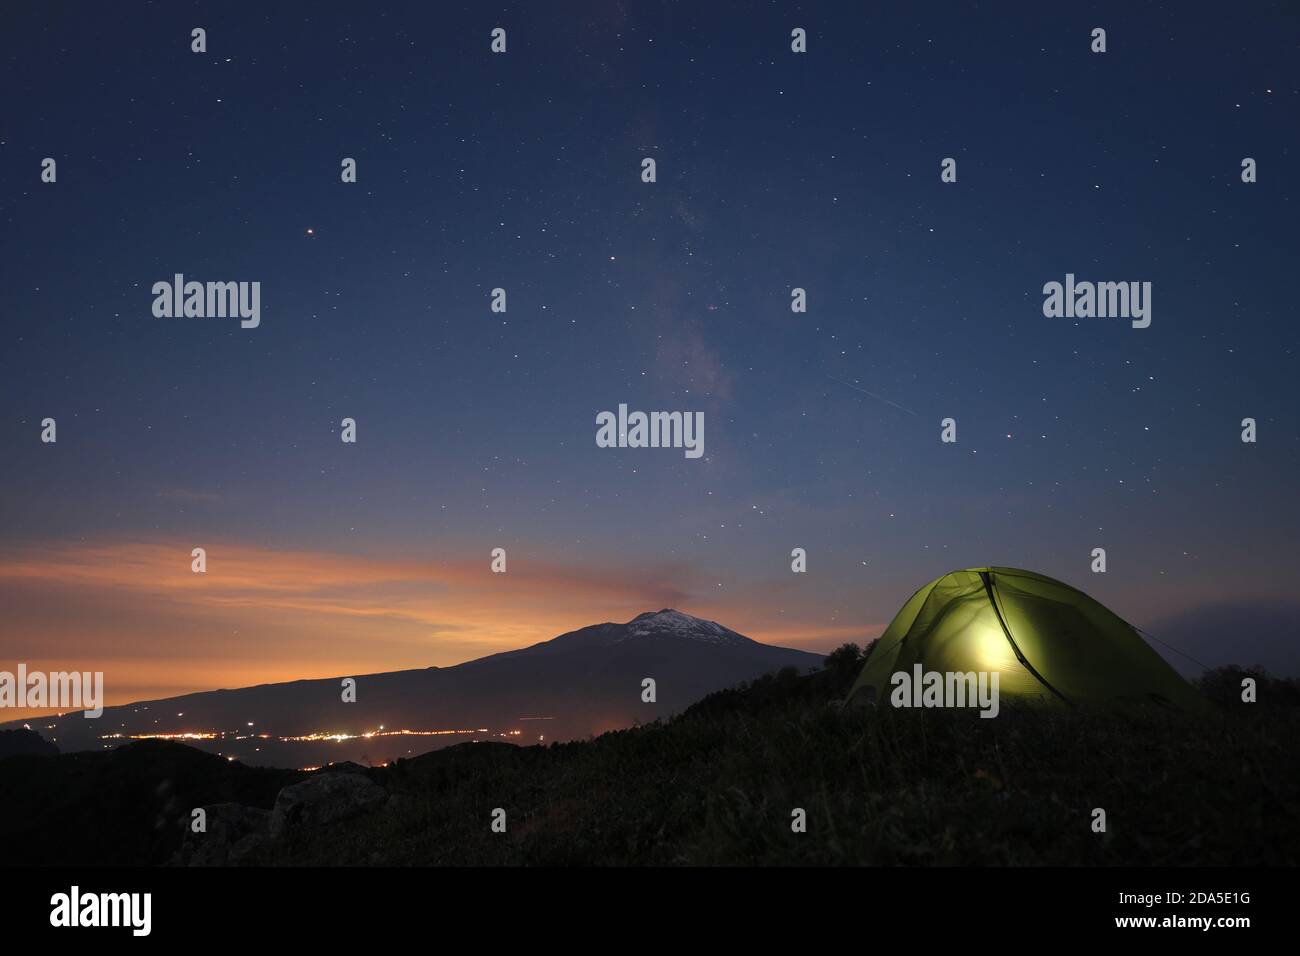 Notte stellata sull'Etna e tenda luminosa, Sicilia Foto Stock